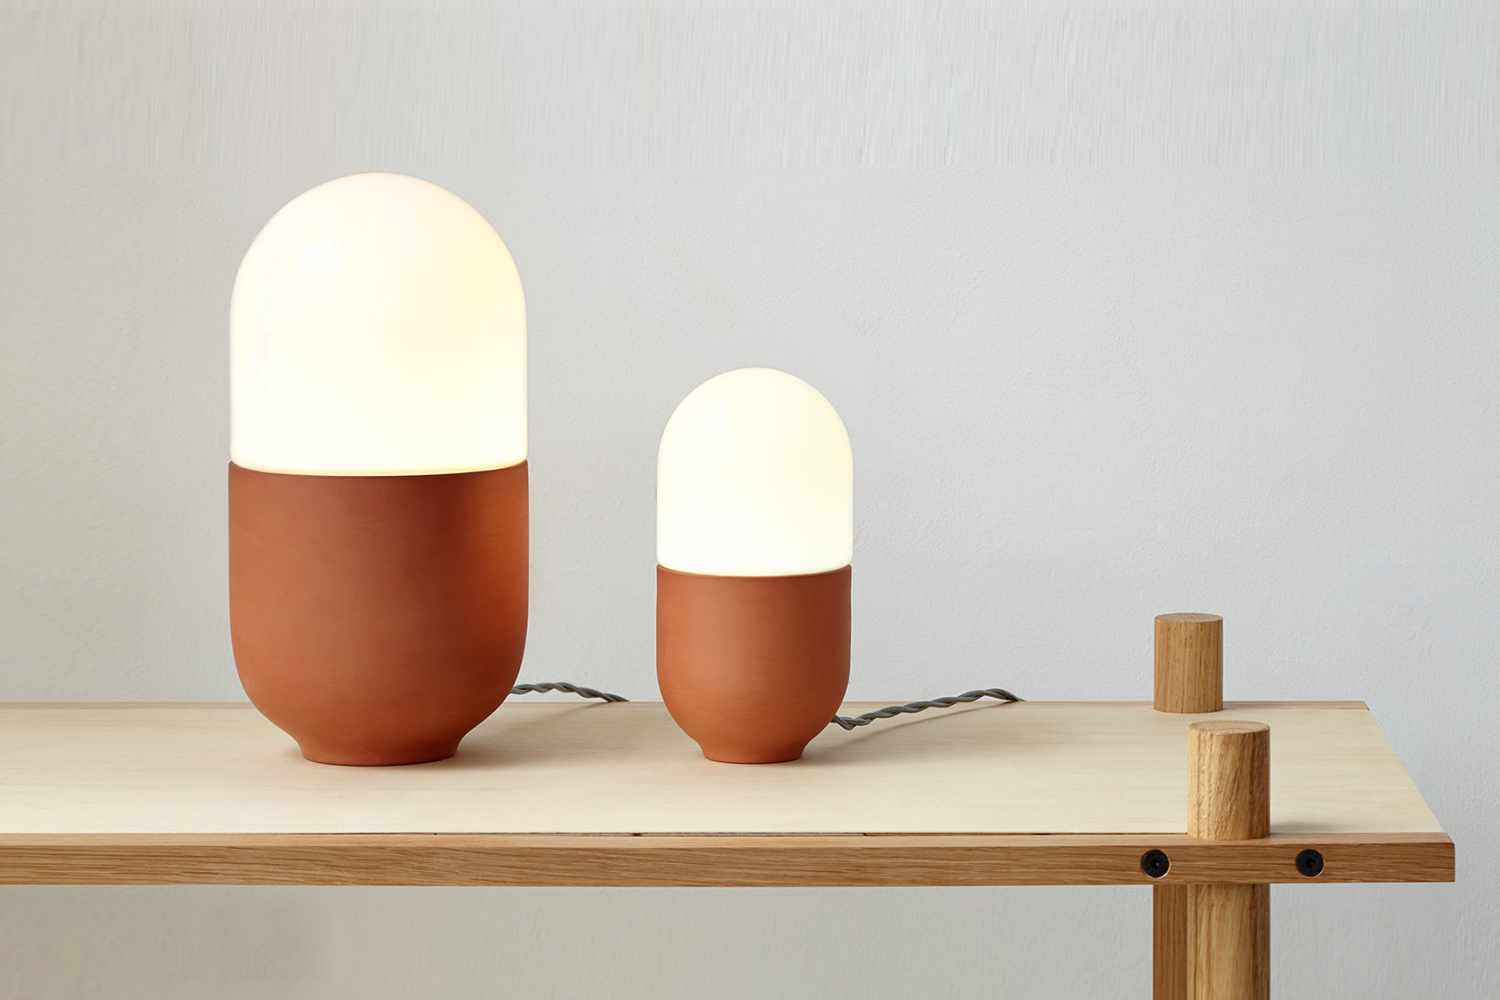 the hand & eye studio duo terracotta table lamp is £\200 £37\1.\2 15